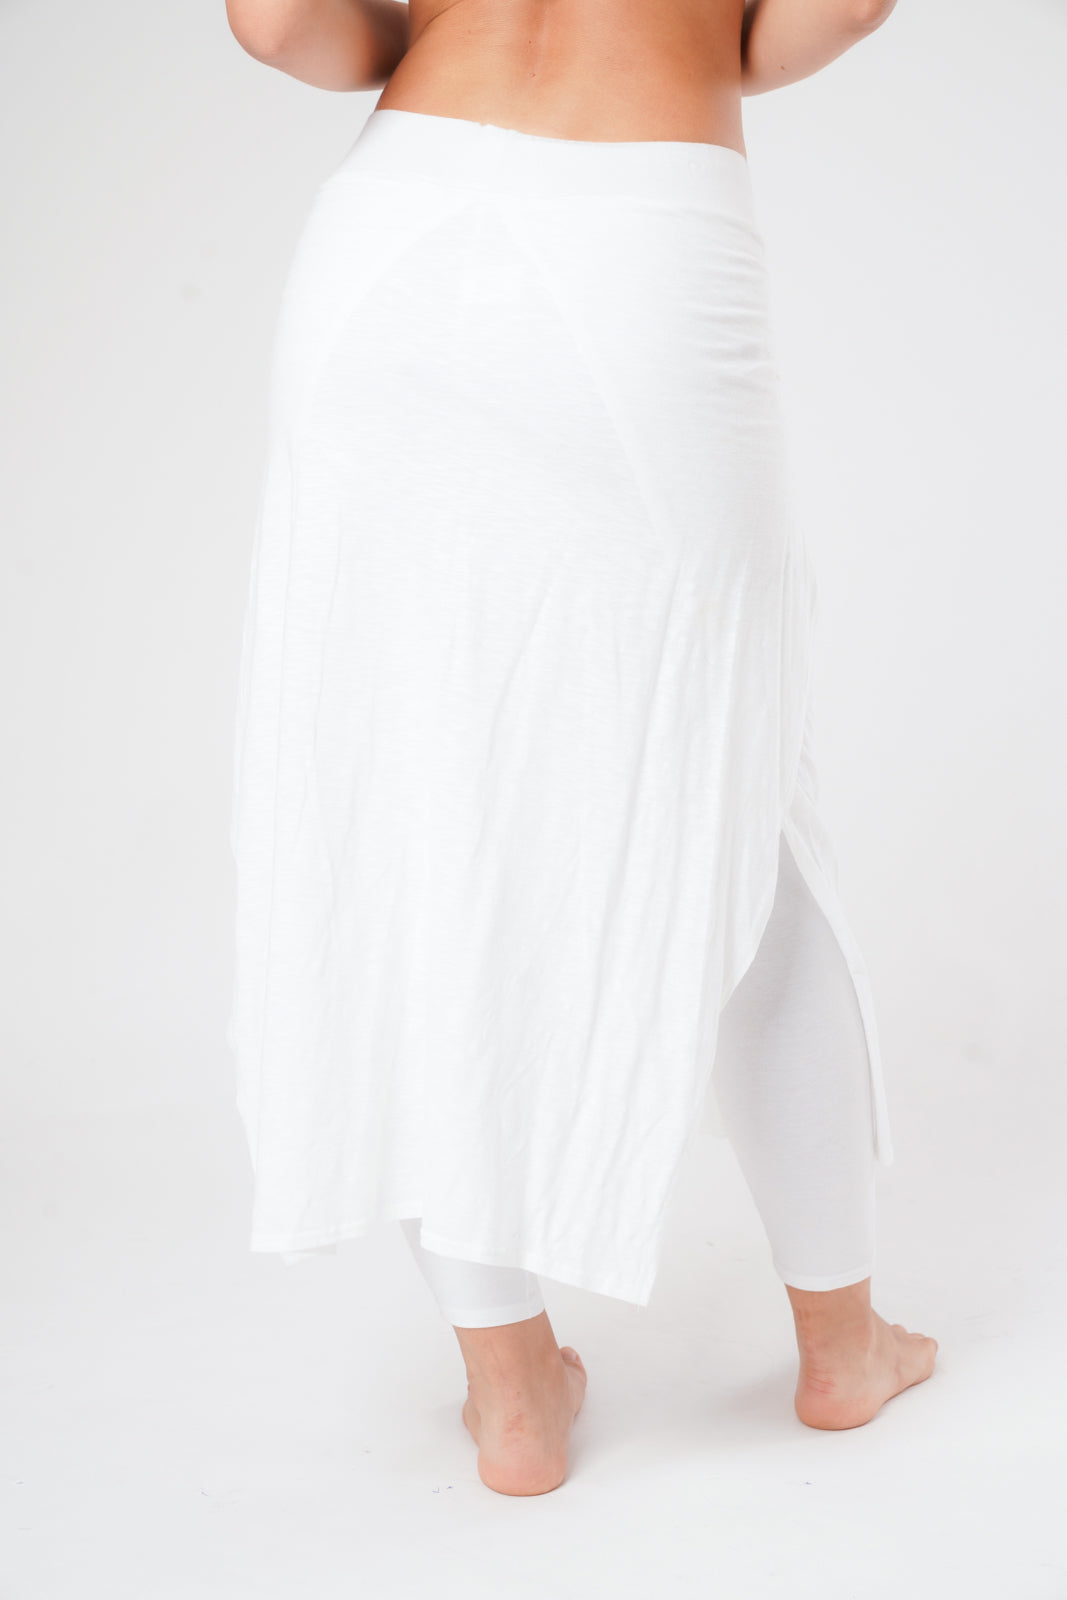 Women's White Cotton Kundalini Yoga Legging with wrap-over Skirt